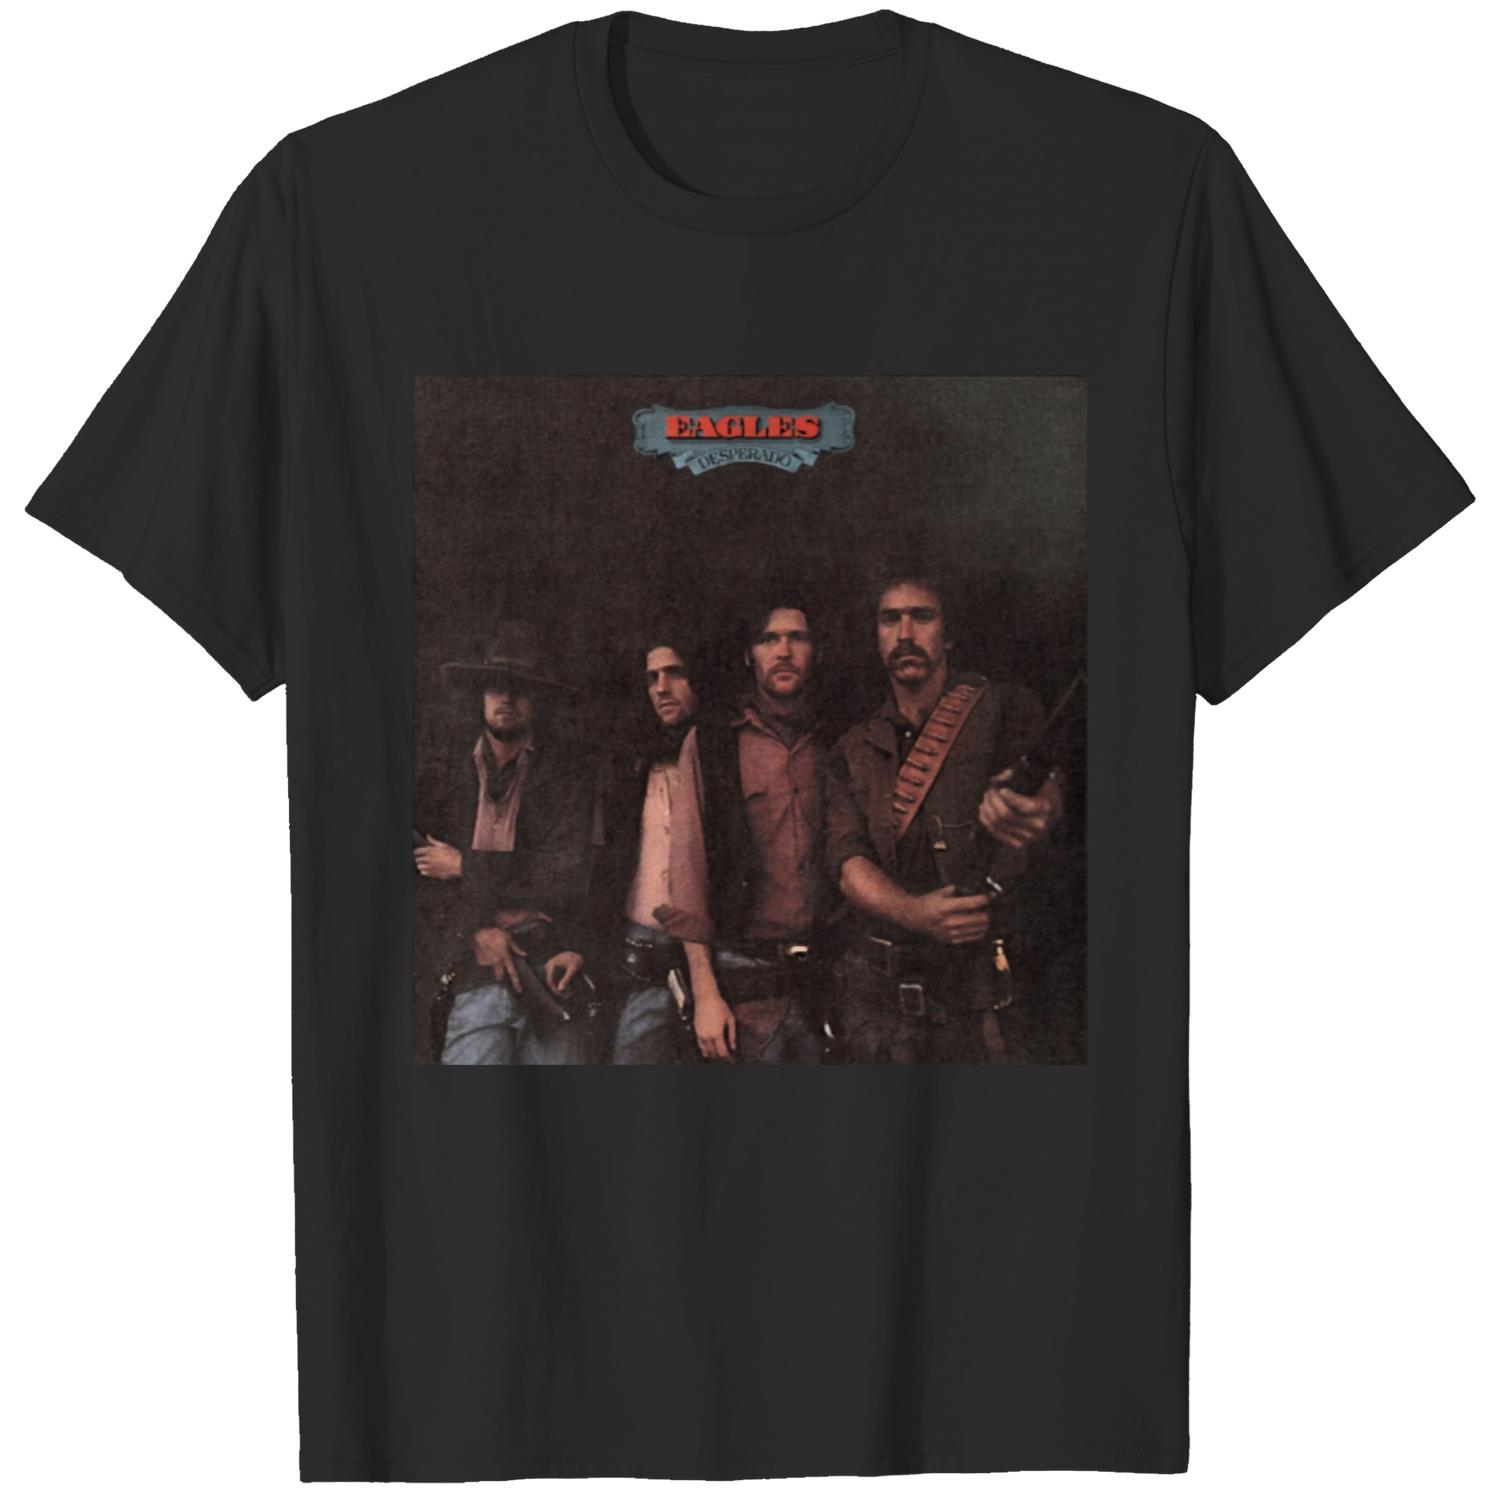 Retro Eagles Desperado Band Legend Limited Edition Classic T-Shirt